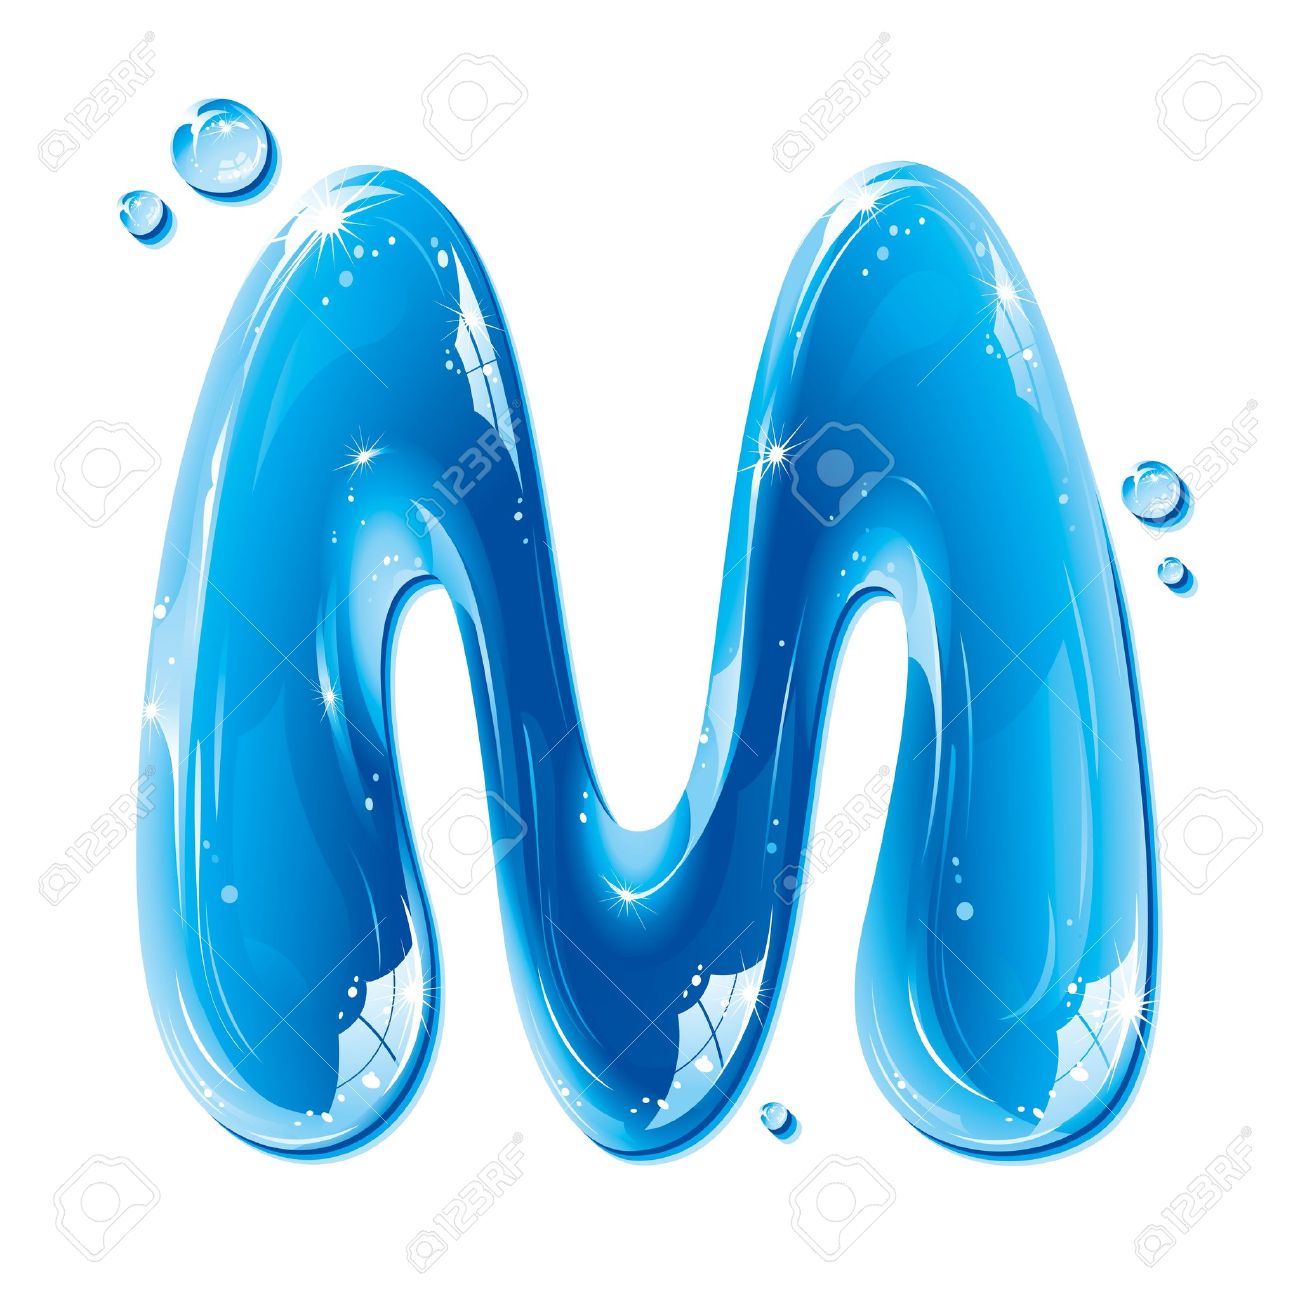 Abc series - water liquid letter - capital M